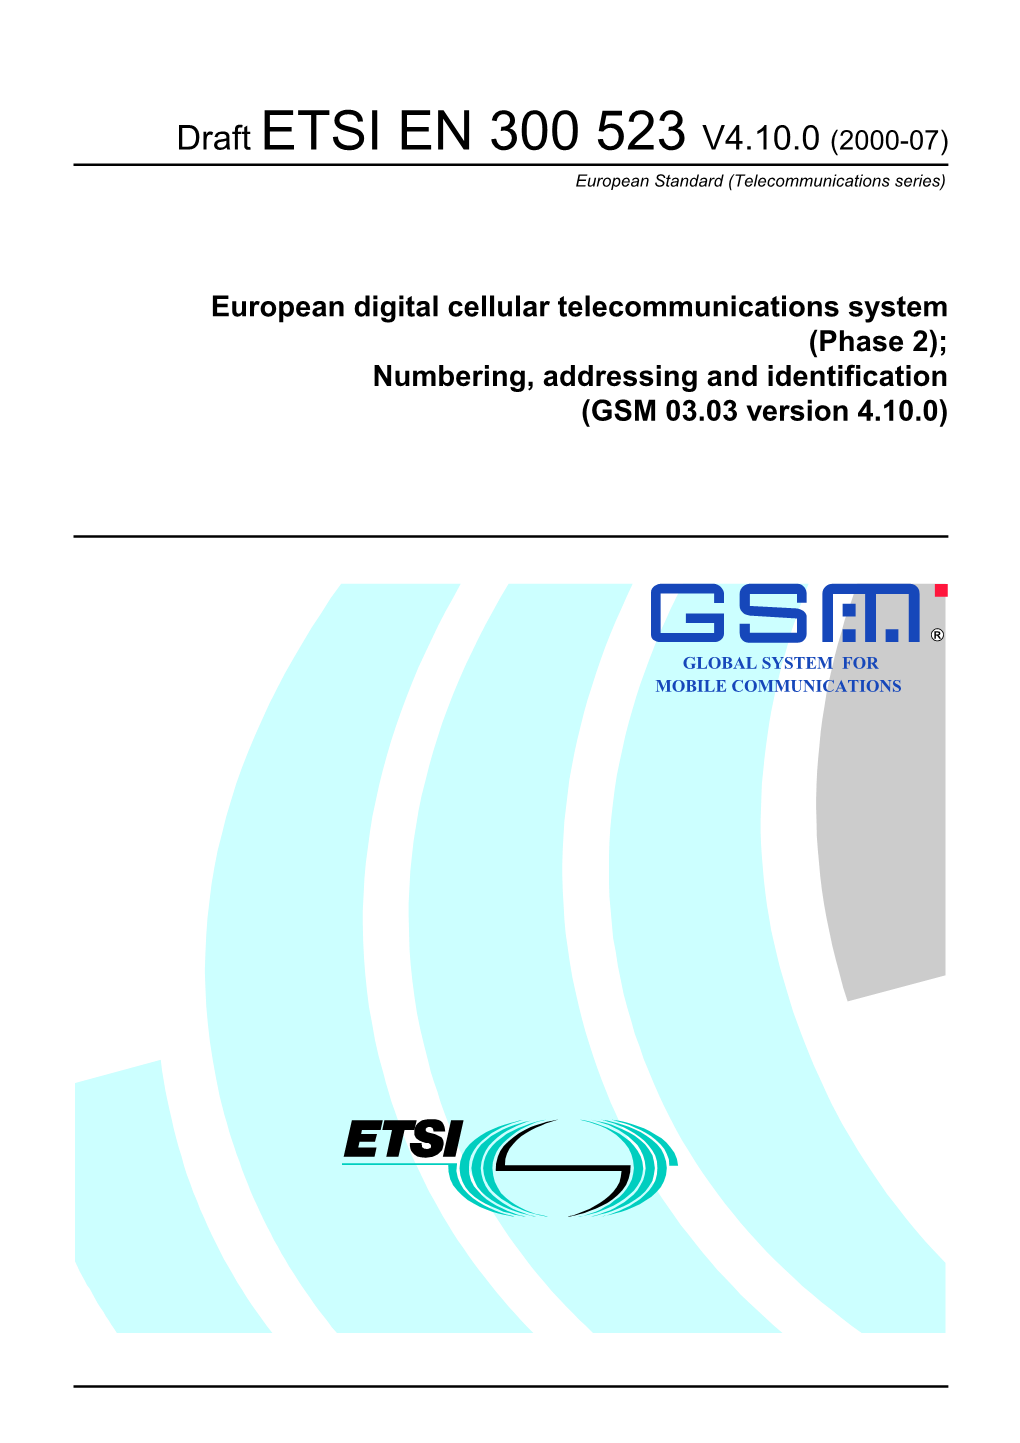 V4.10.0 (2000-07) European Standard (Telecommunications Series)